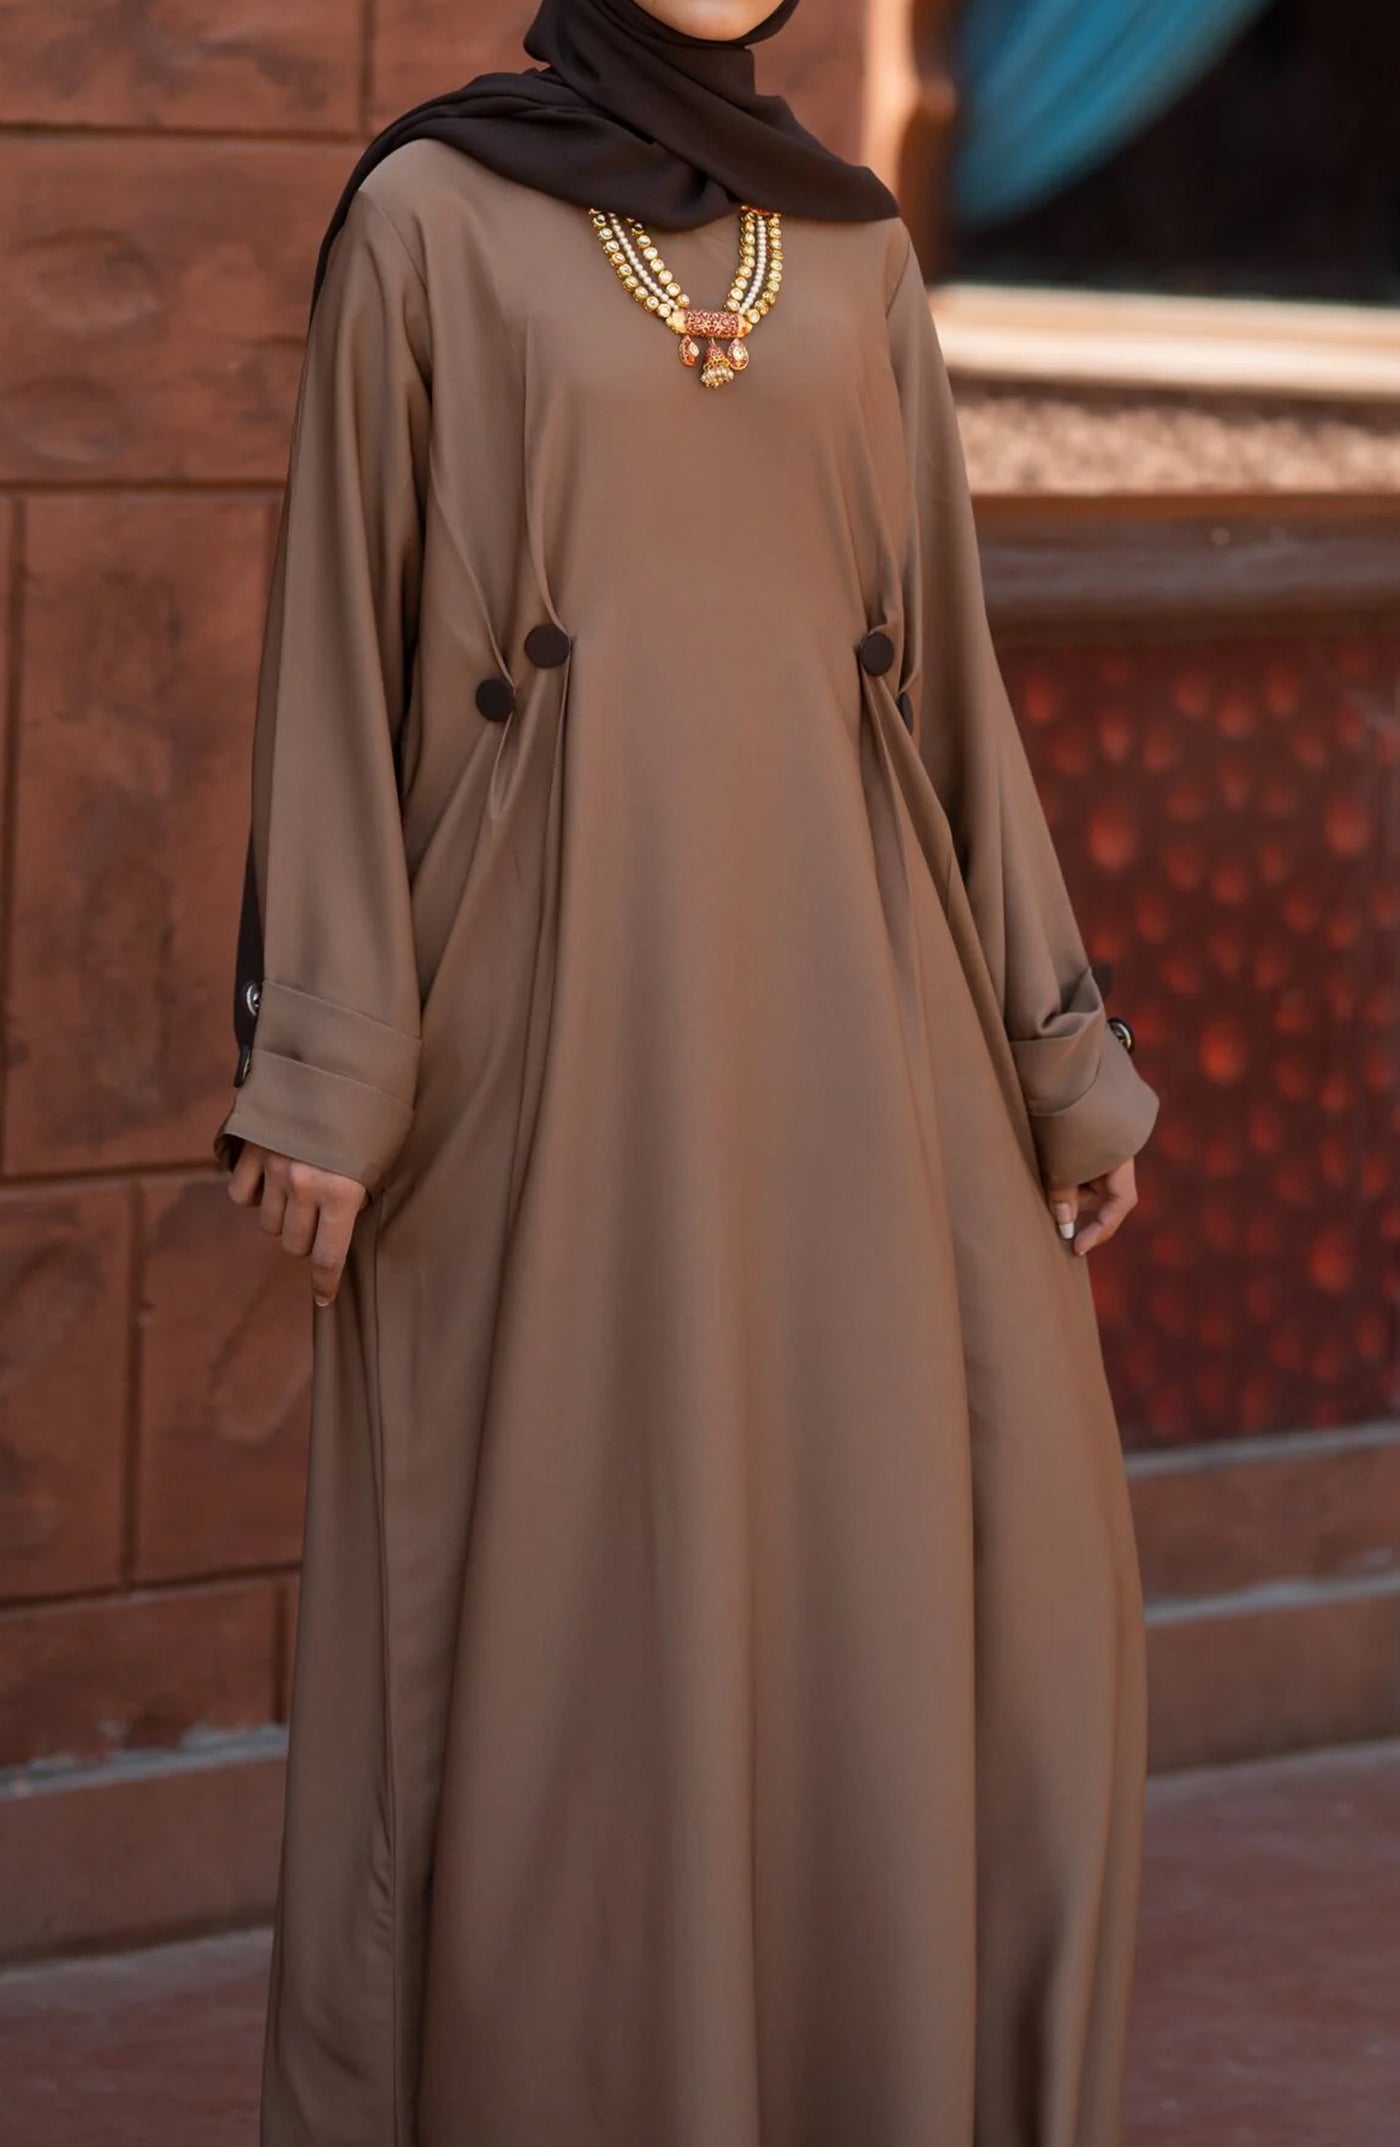 beige pleated closed abaya in pakistan